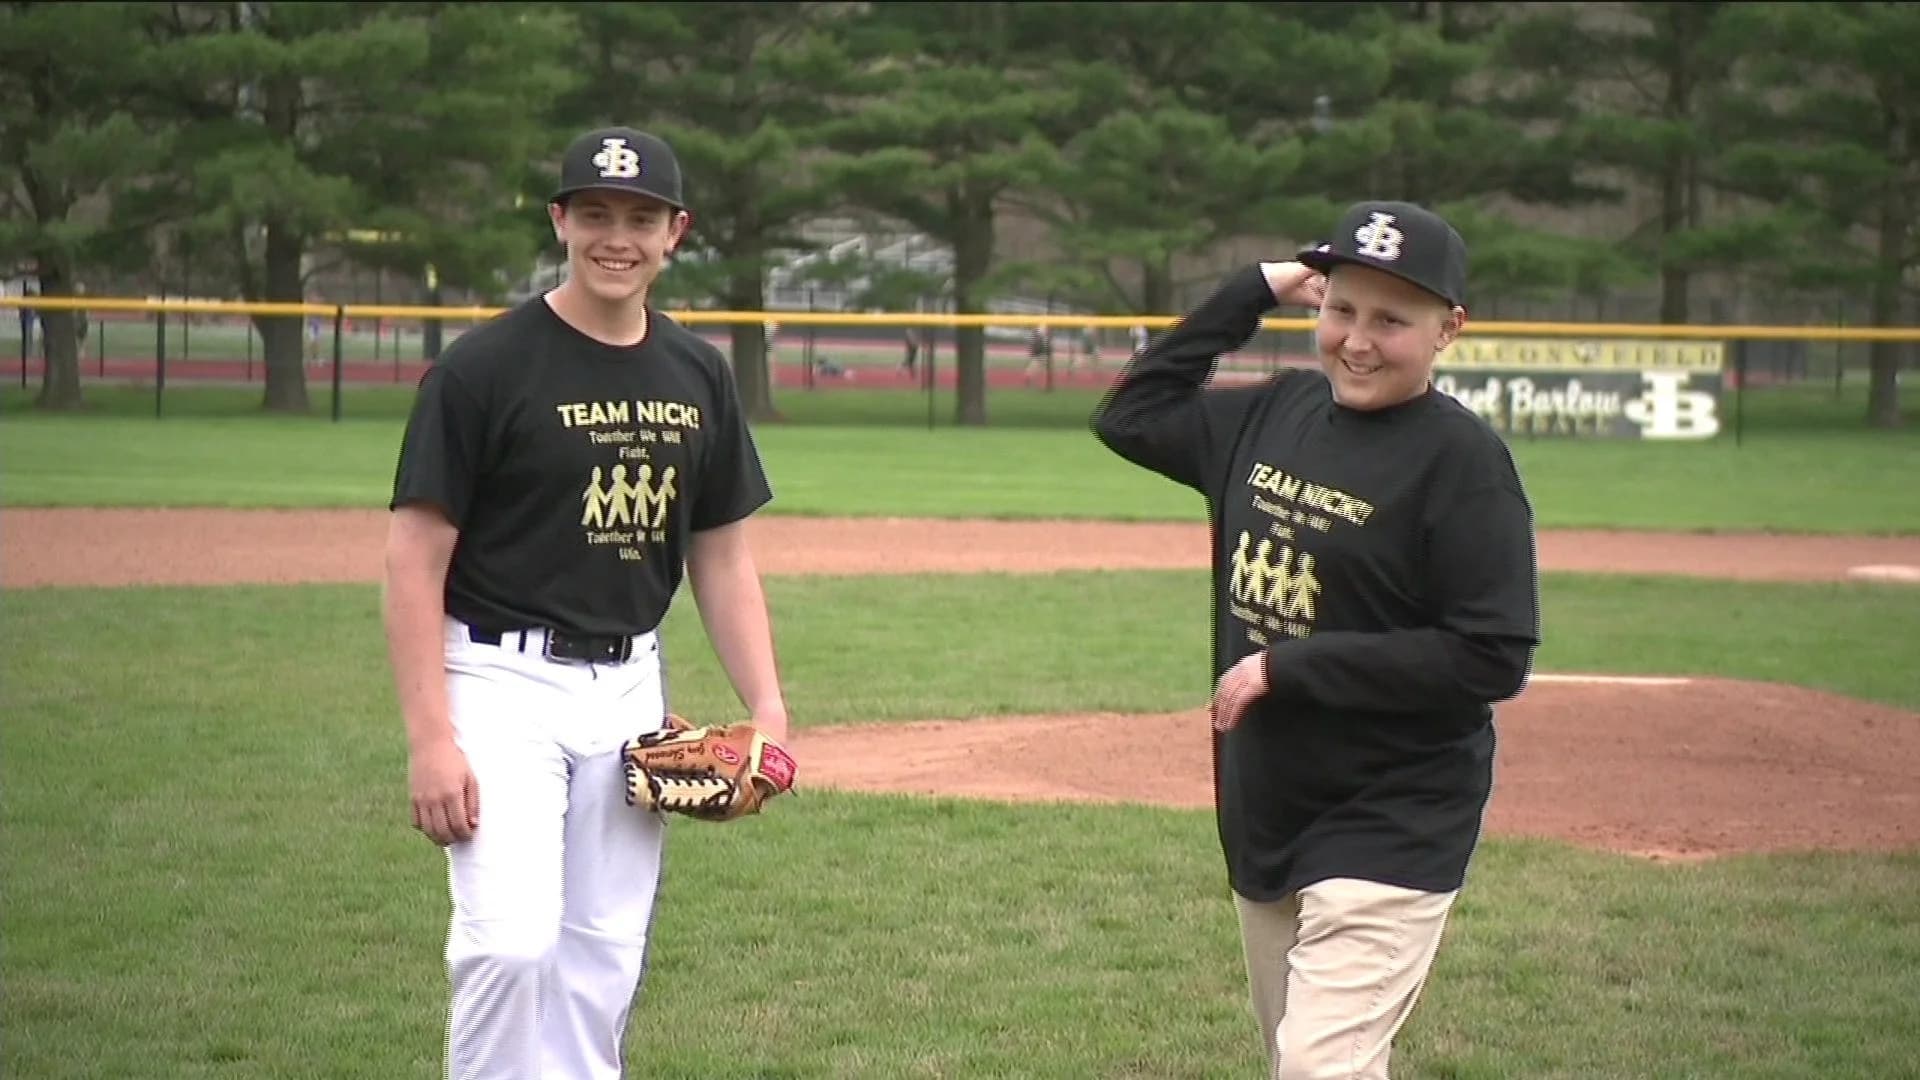 High school baseball team dedicates game to student fighting cancer